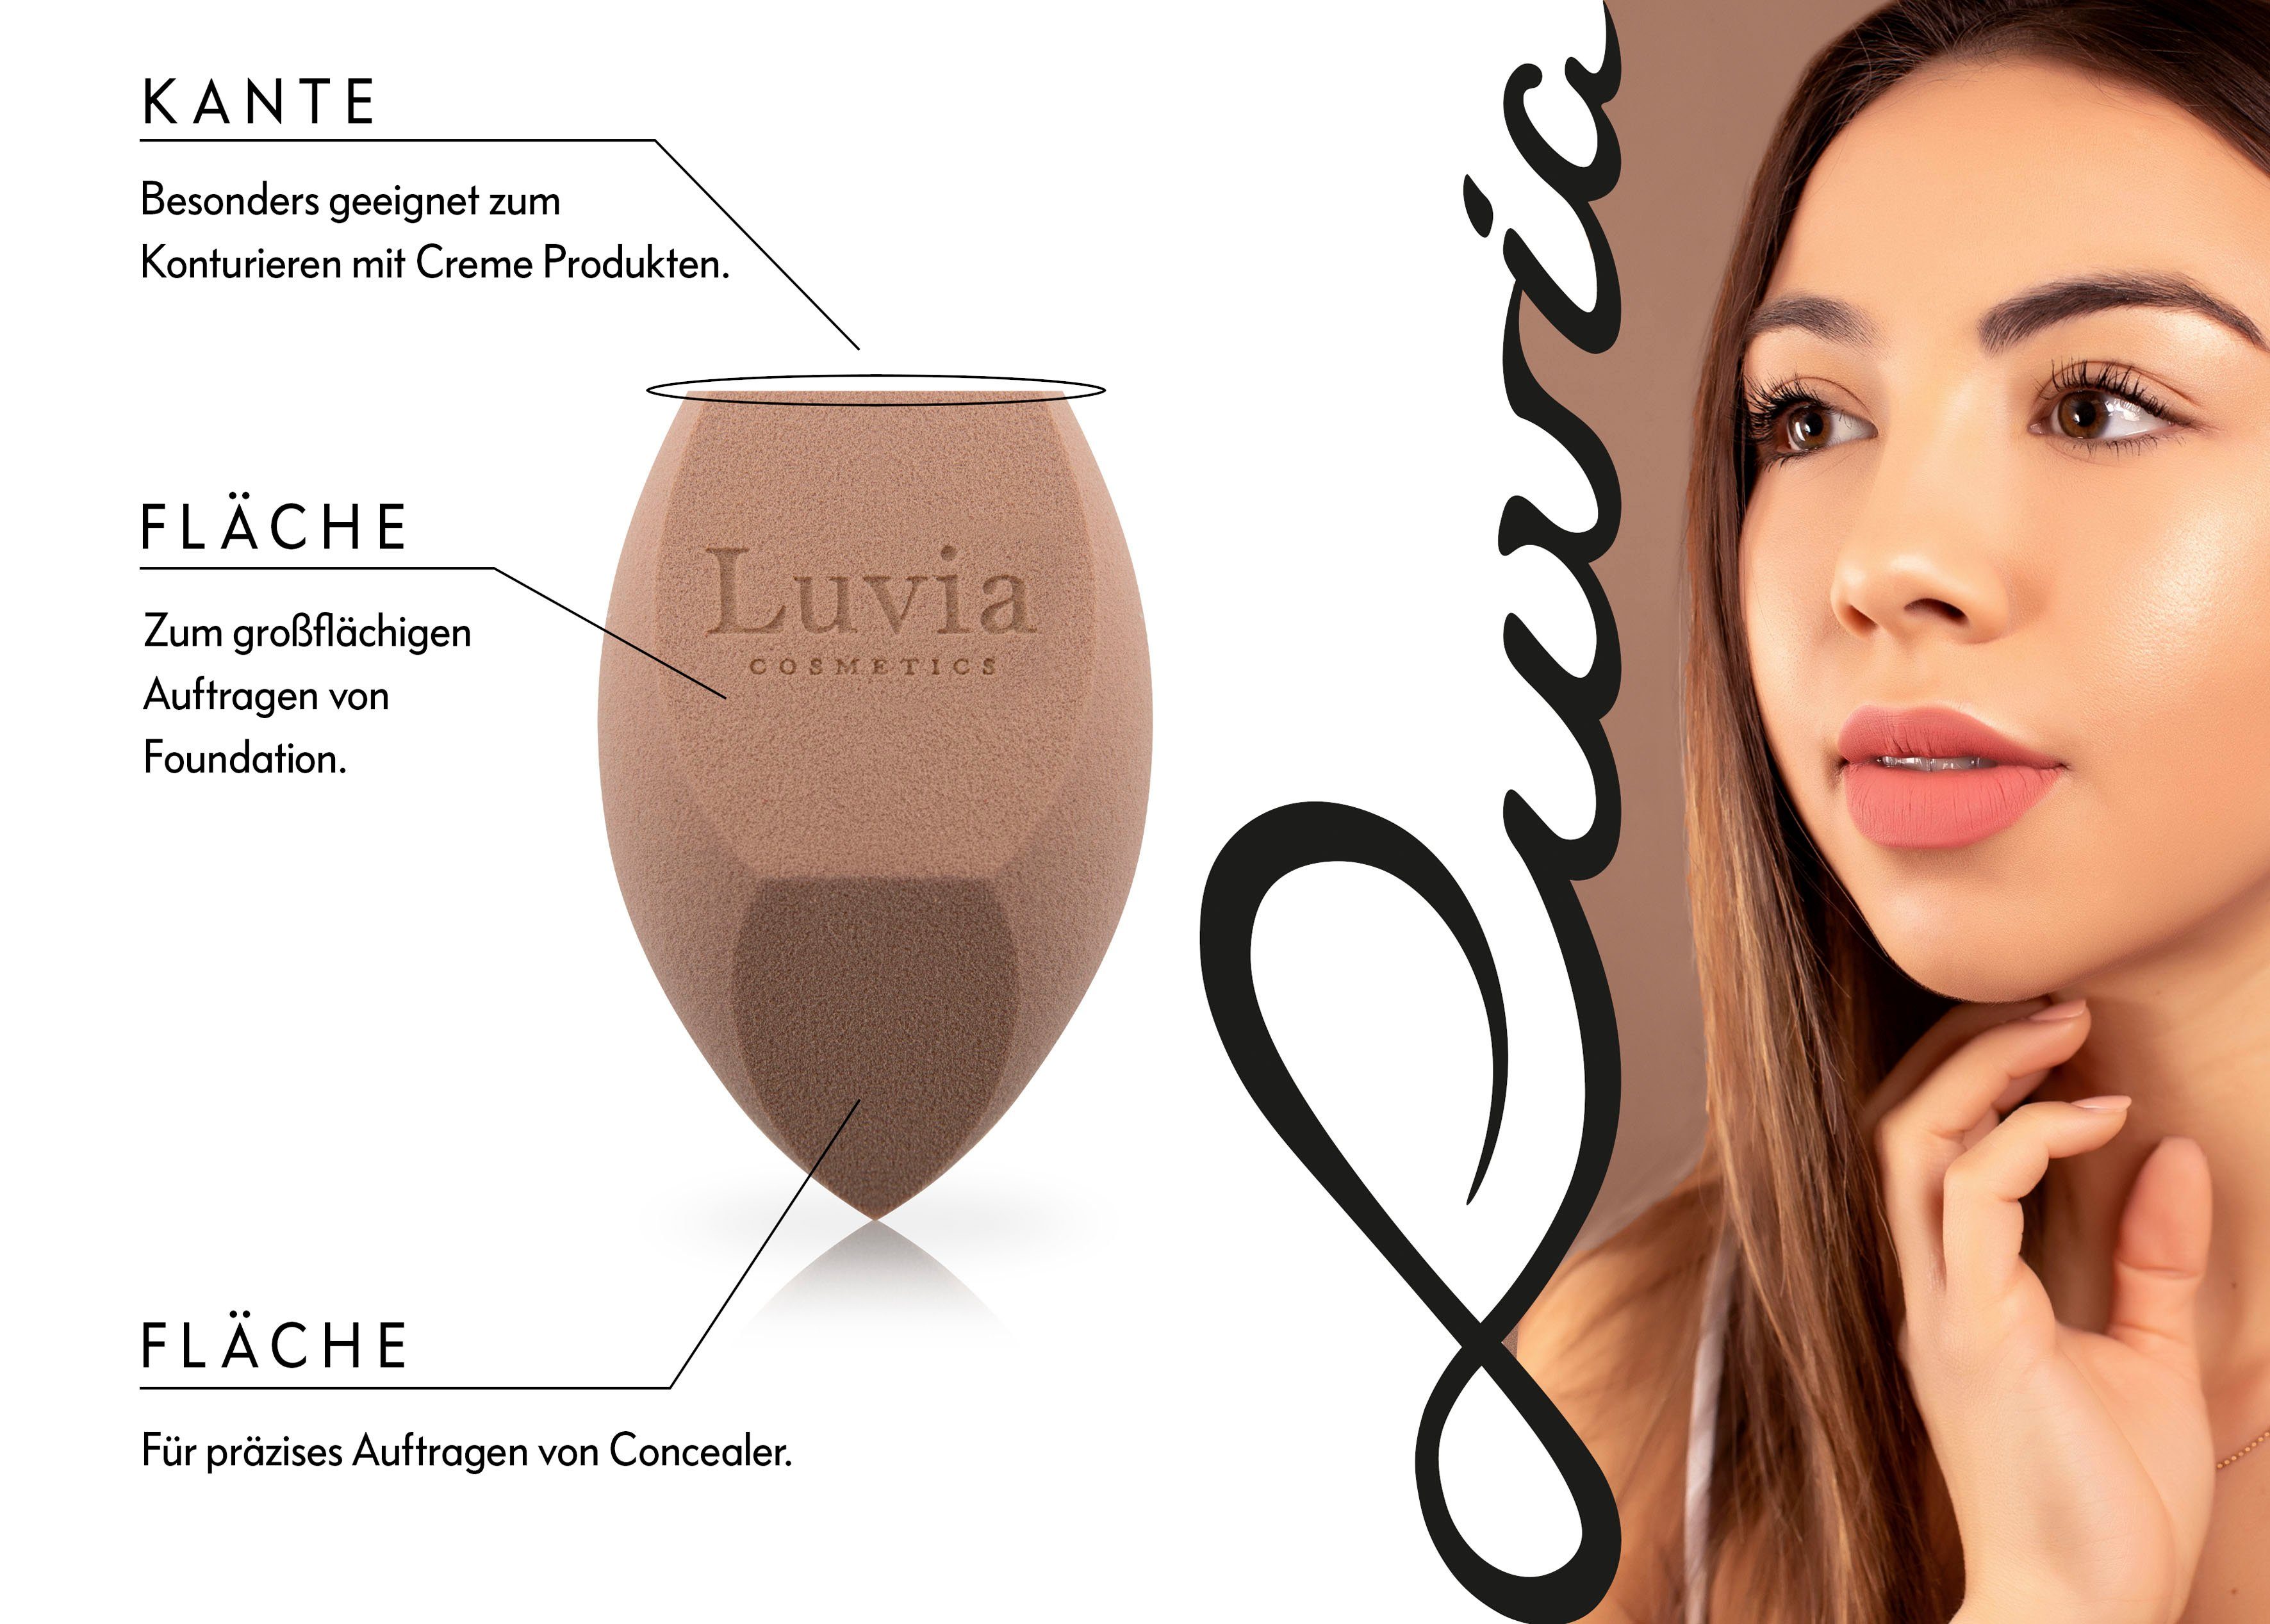 Luvia Cosmetics Schwamm Prime Vegan Make-up Body Schwamm XXL Sponge, Make-up